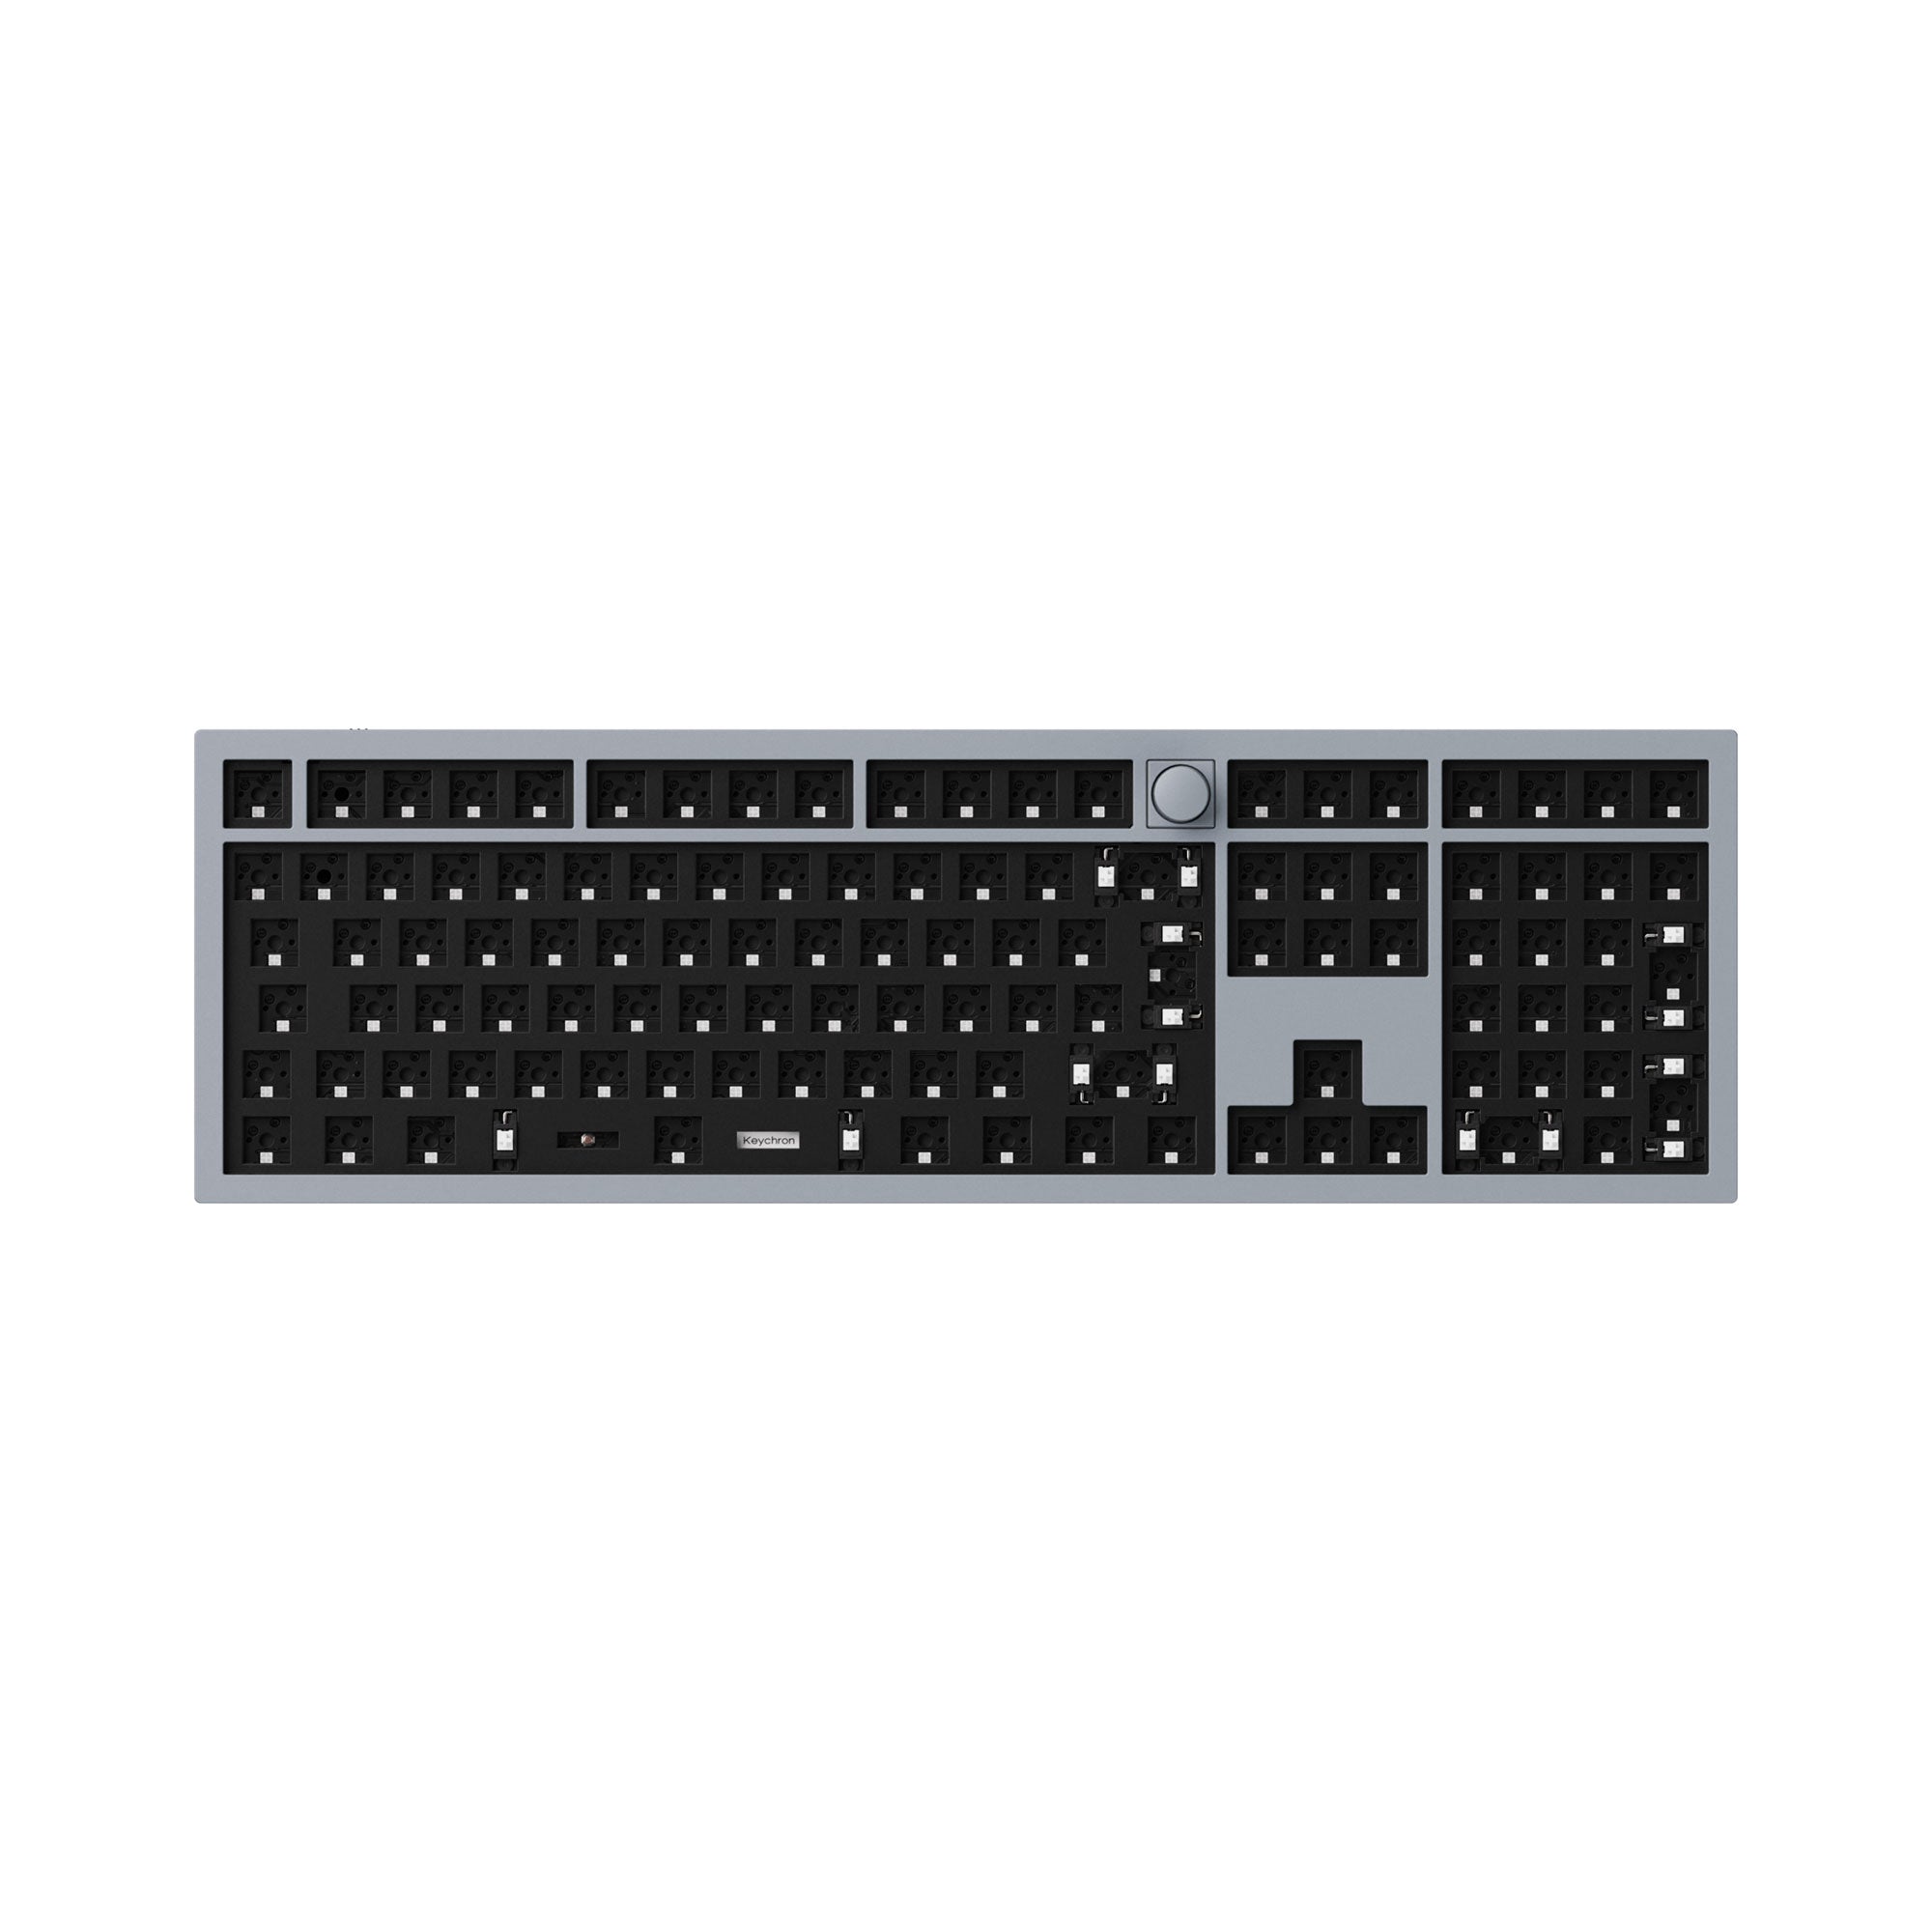 Keychron Q6 QMK/VIA custom mechanical keyboard knob version full size aluminum for Mac Windows Linux barebone grey frame